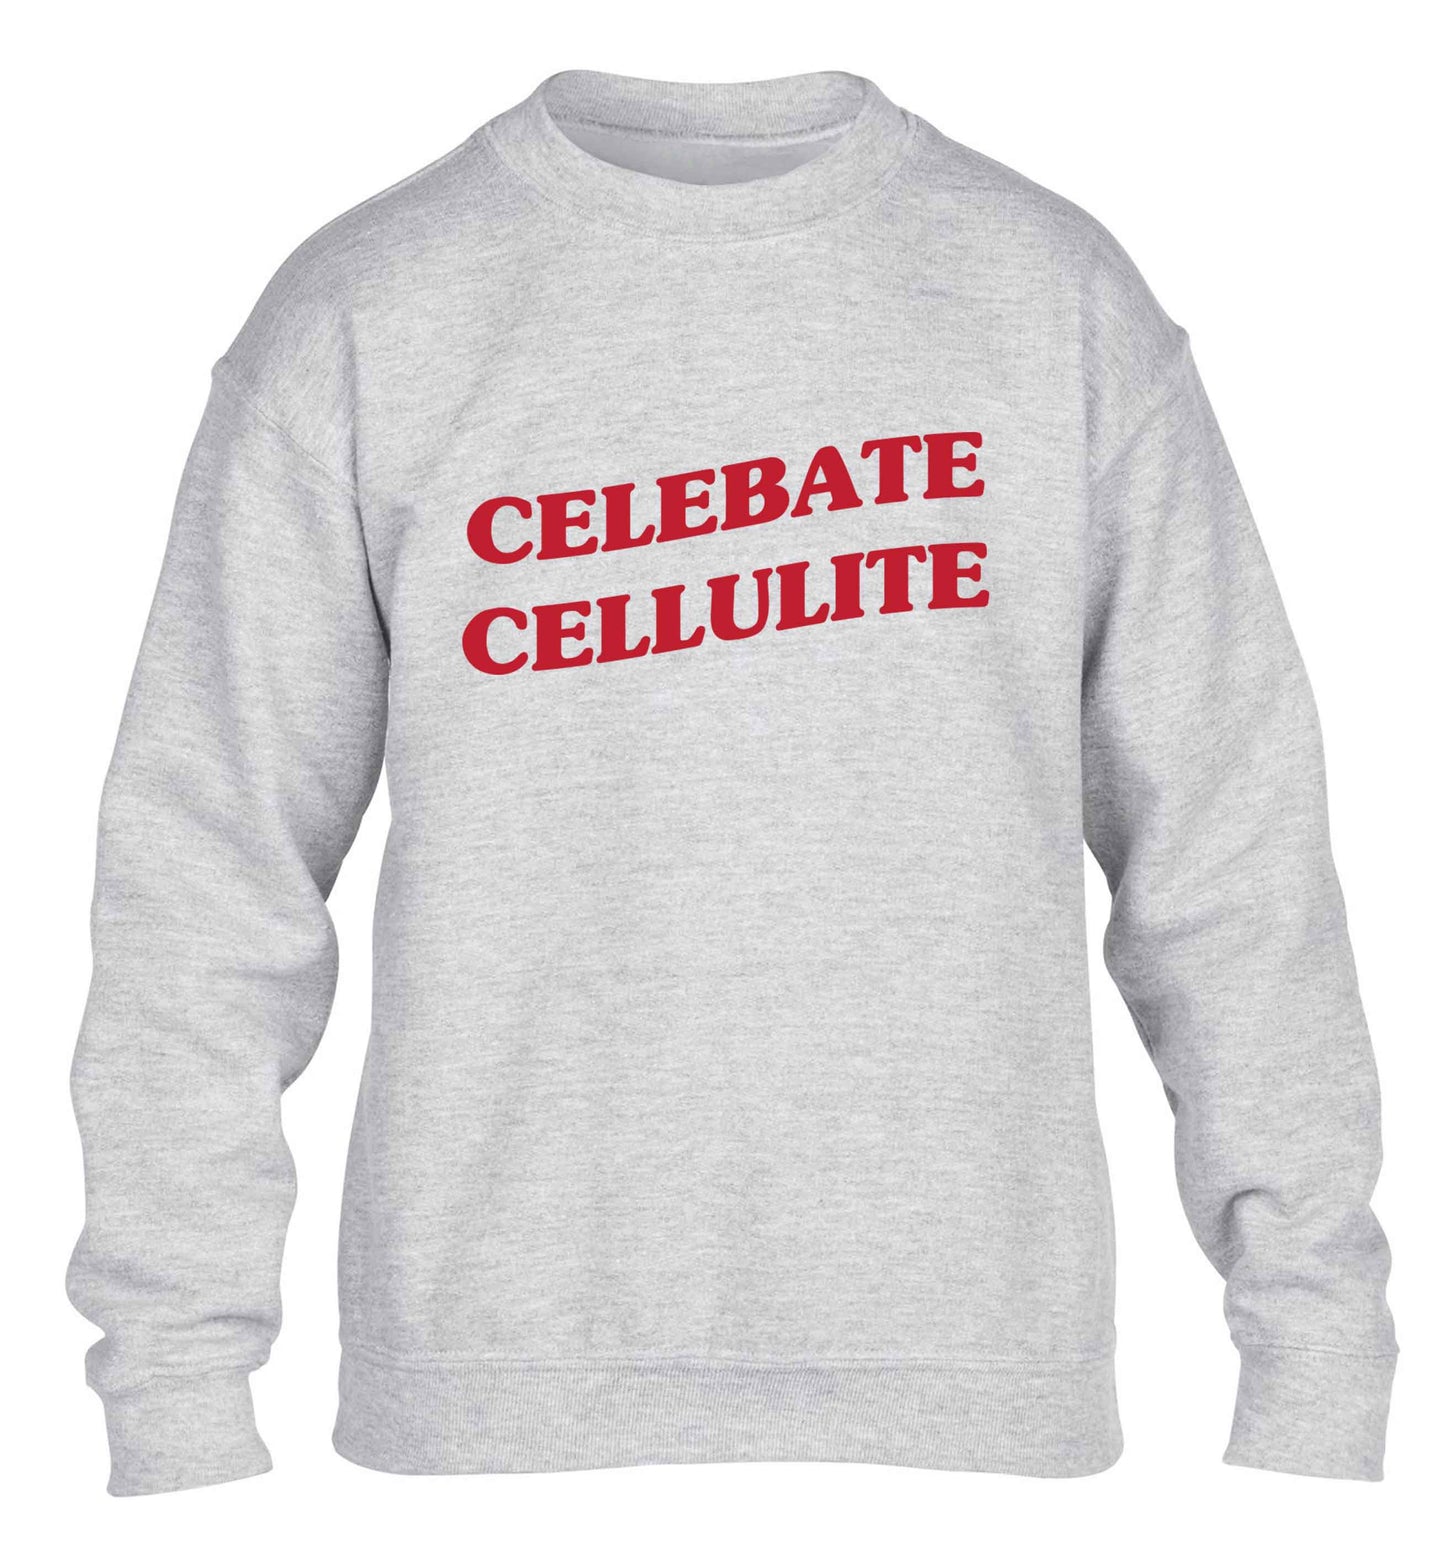 Celebrate cellulite children's grey sweater 12-13 Years